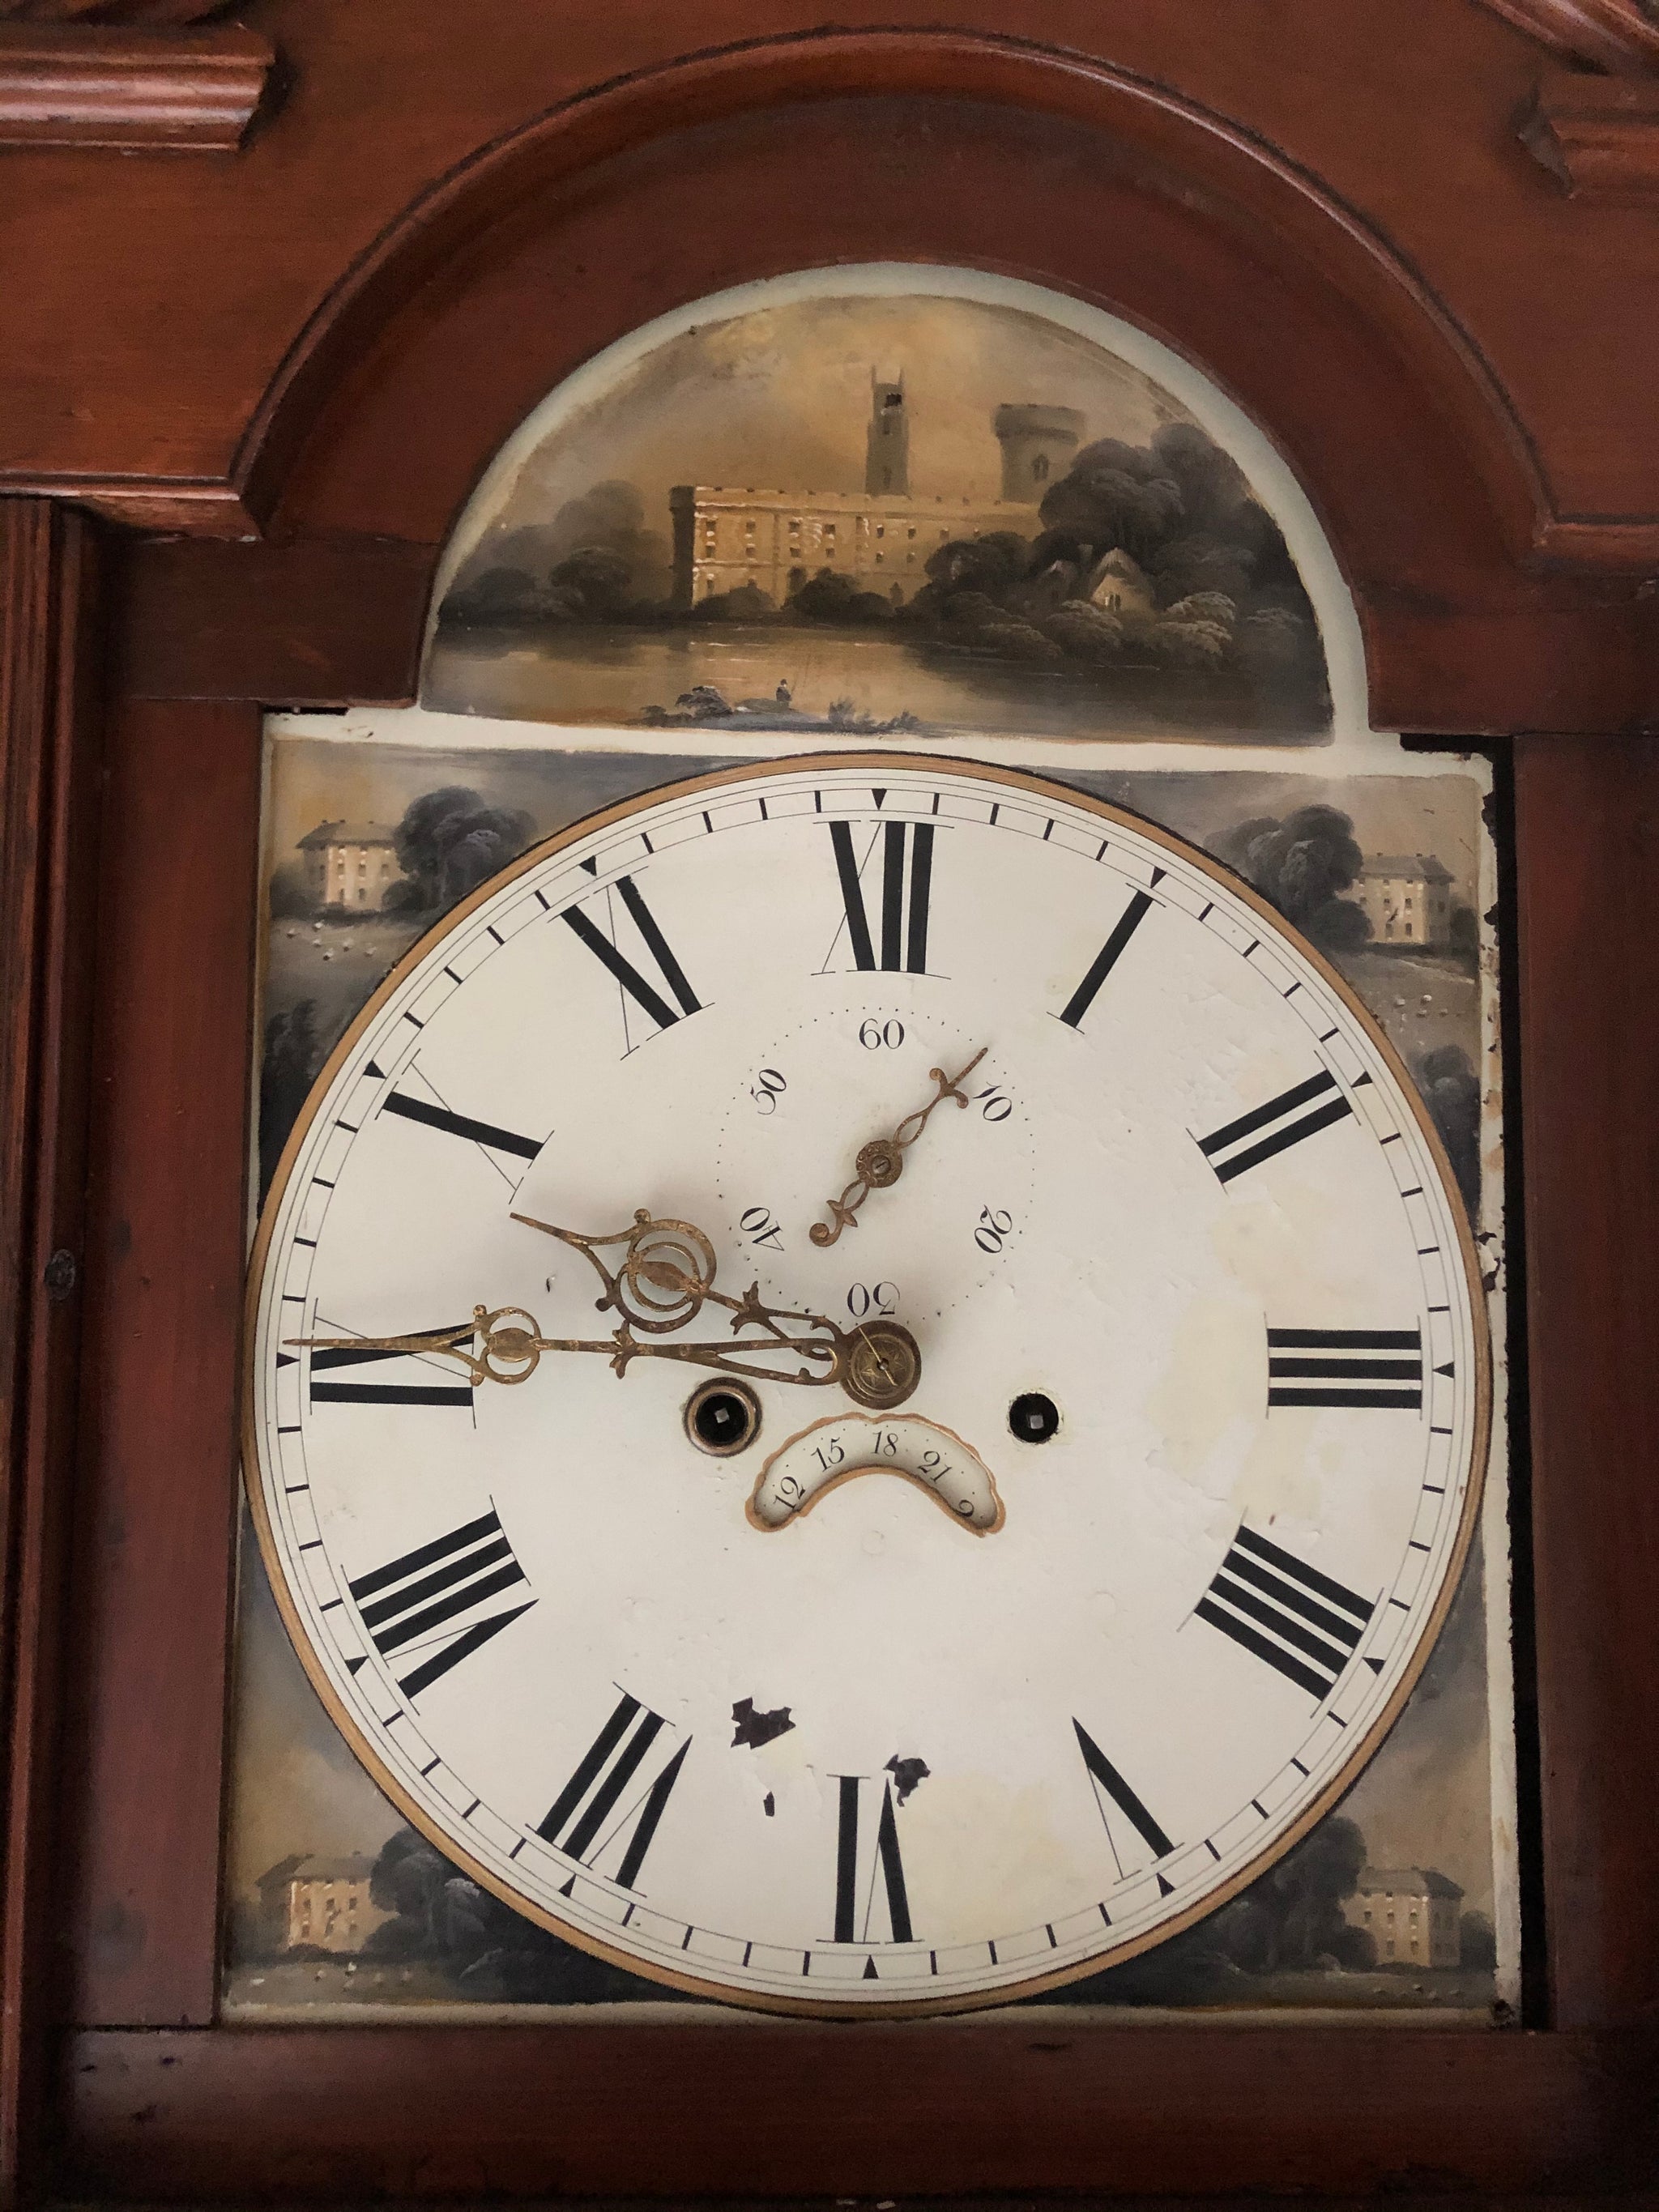 Finding Vintage with Delaney Antique Clocks